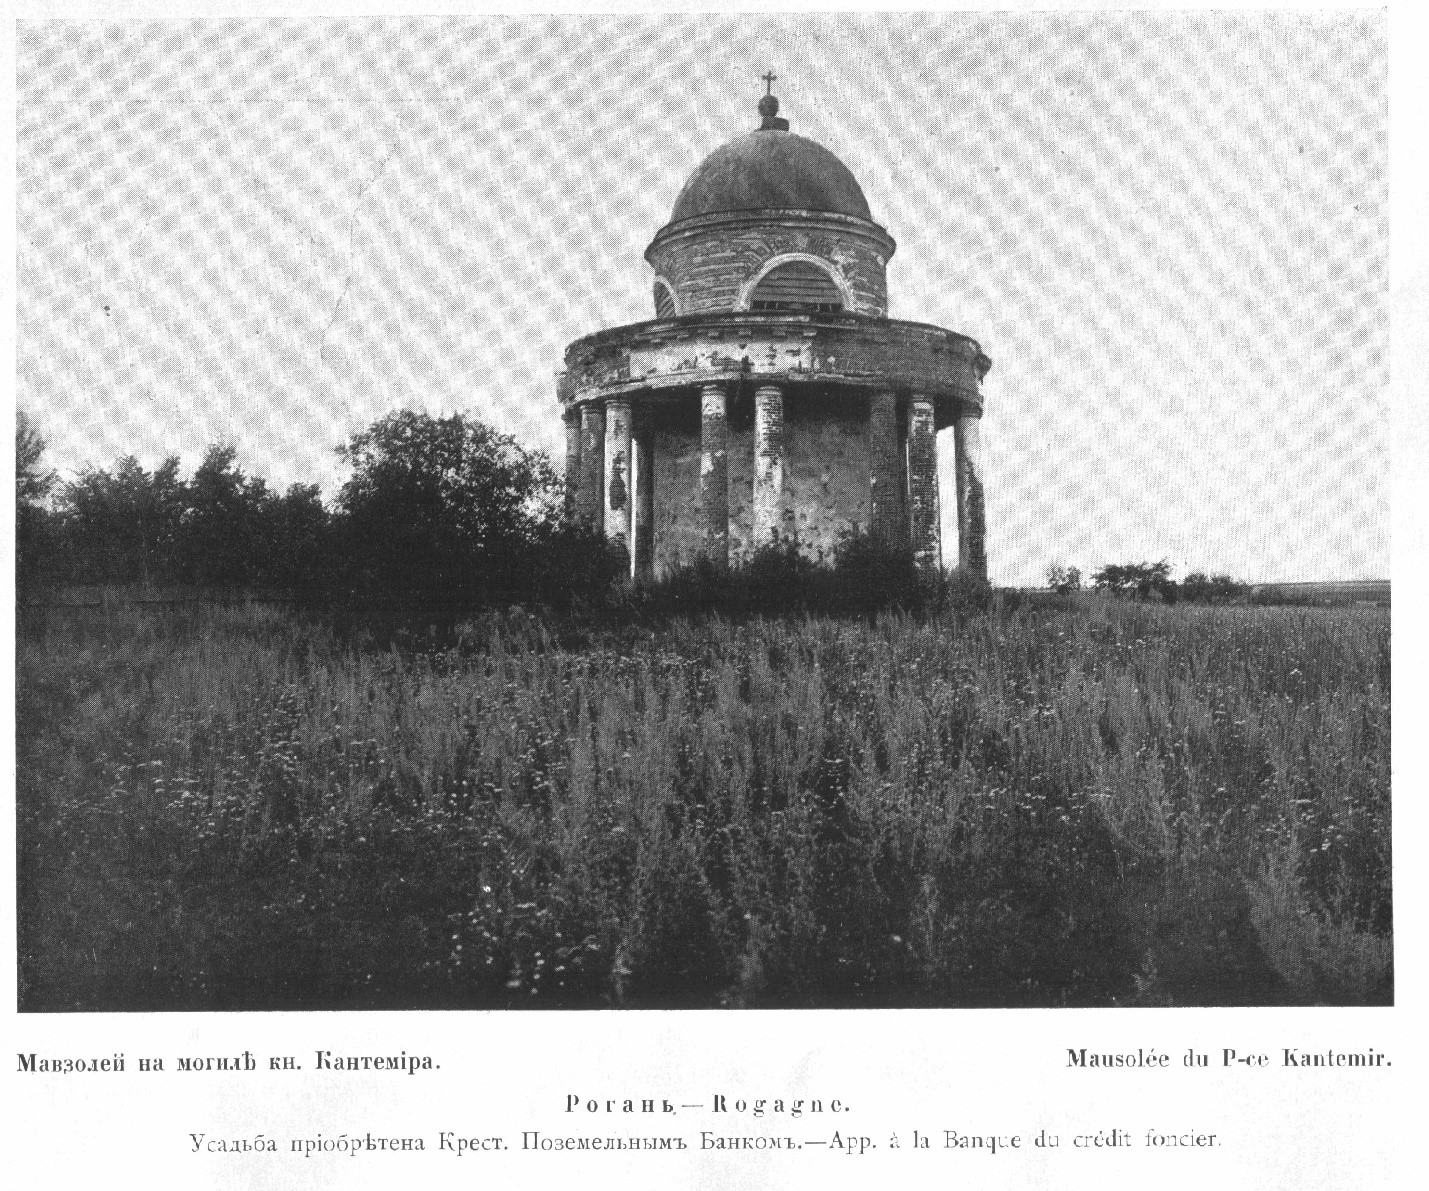 Mausoleum of Prince Kantemir.